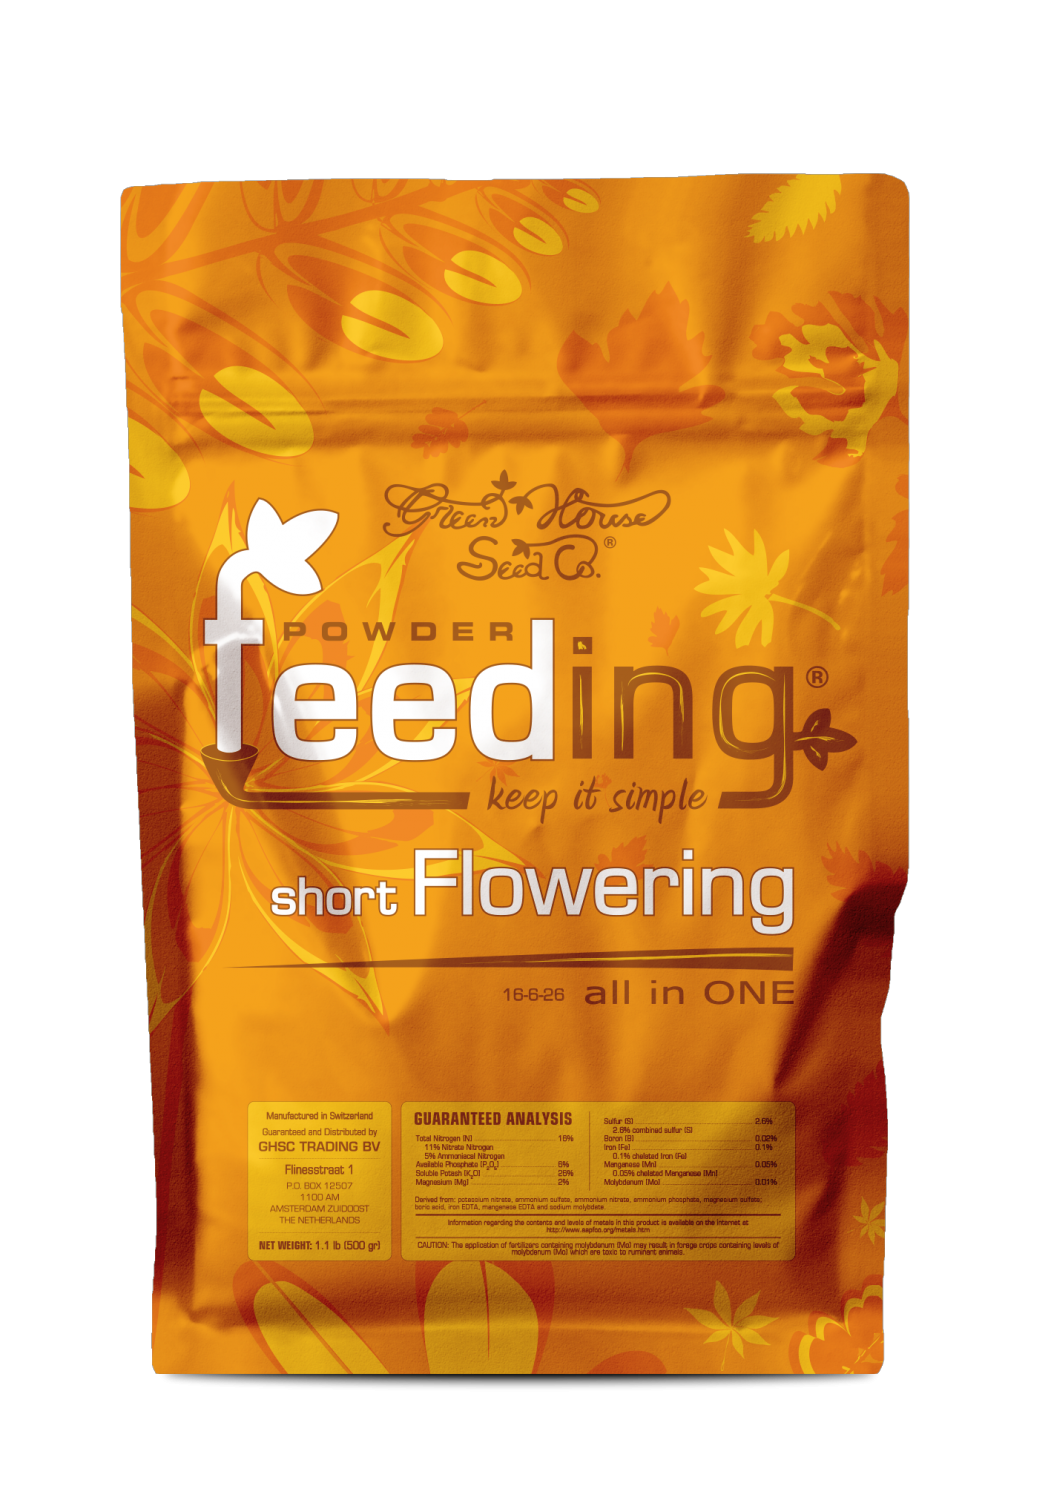 Short Flowering Powder by Green House Feeding